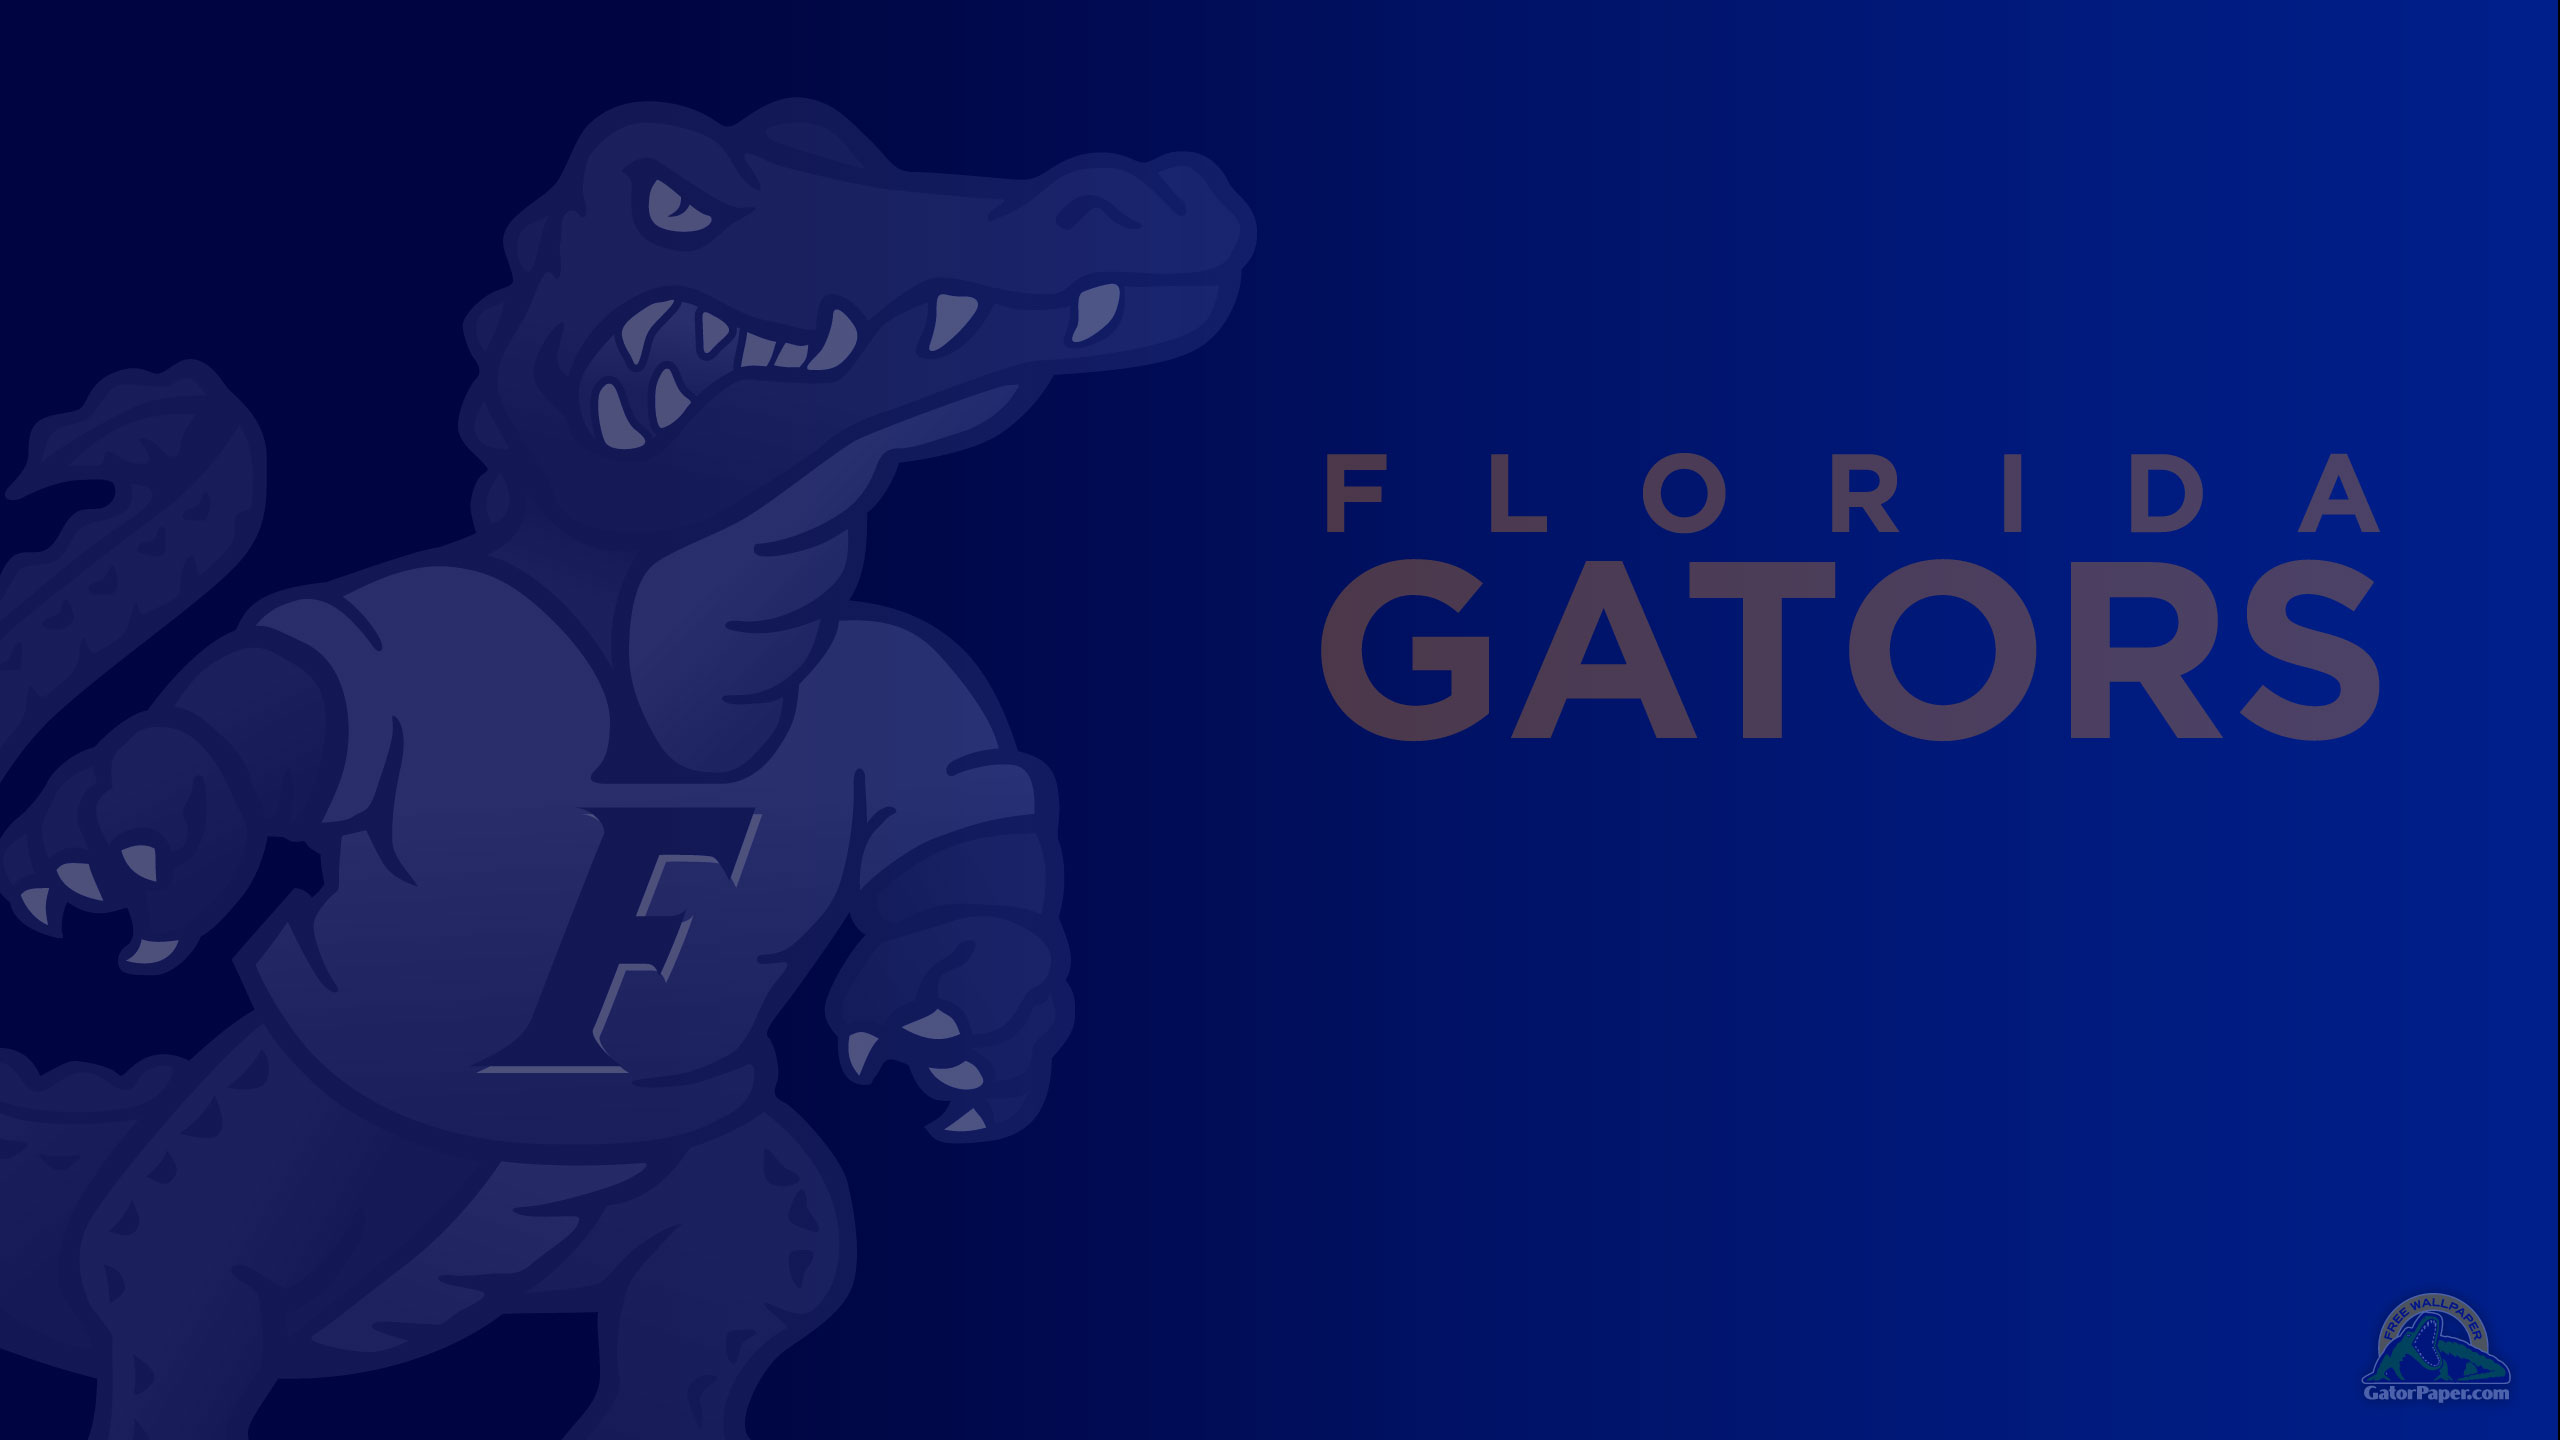 Florida Gators Dark Blue Wallpaper Gatorpaper Sports Desktop